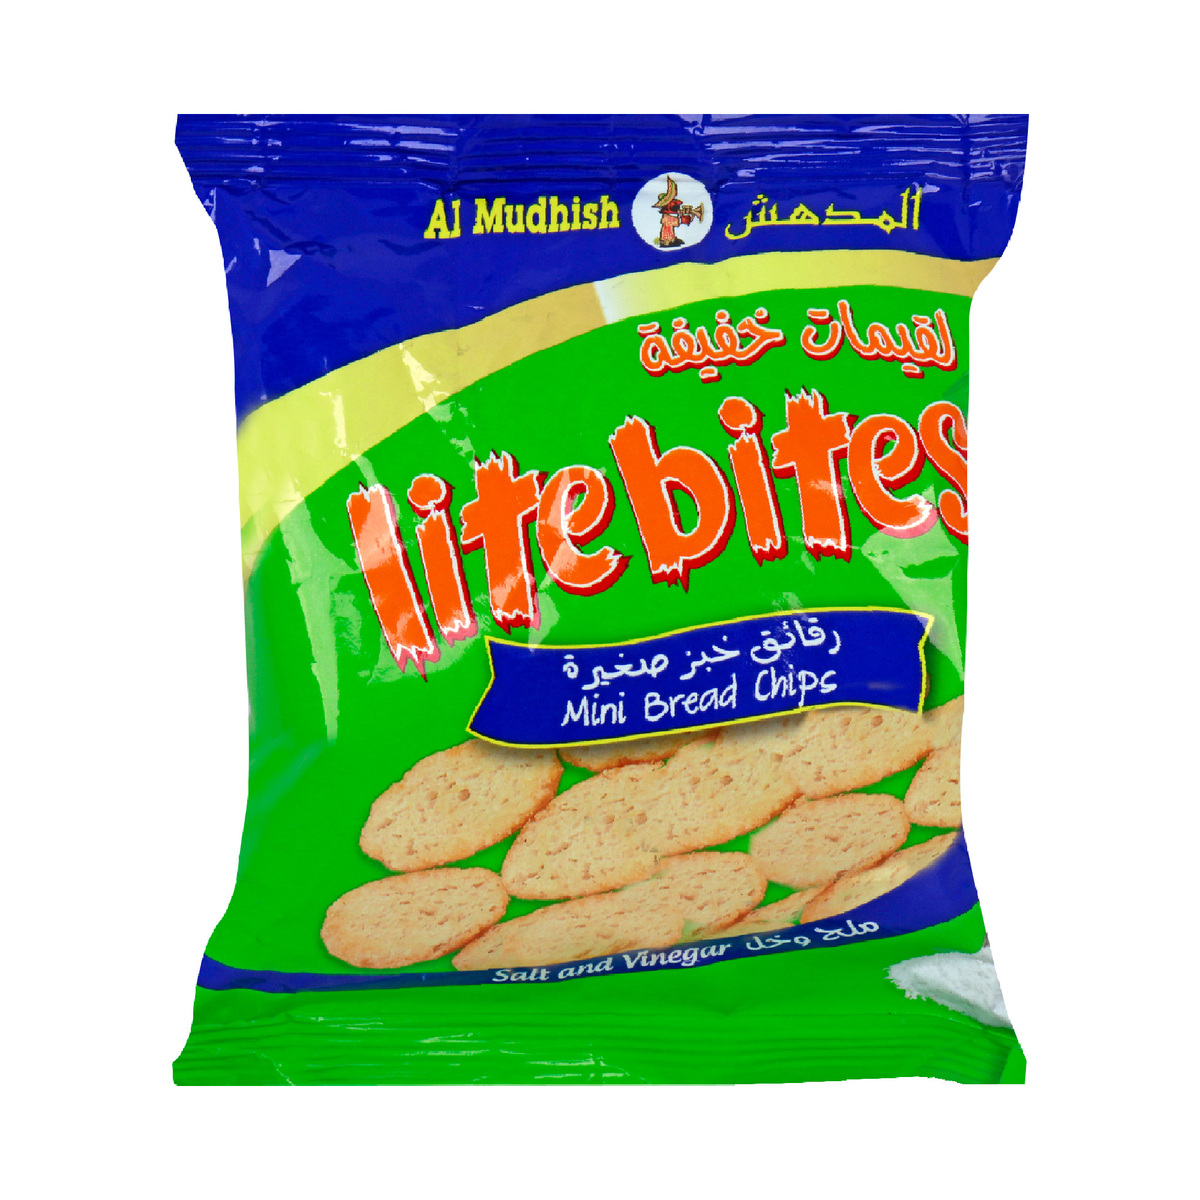 Al Mudhish Lite Bites Salt & Vinegar Mini Bread Chips 24 x 18 g